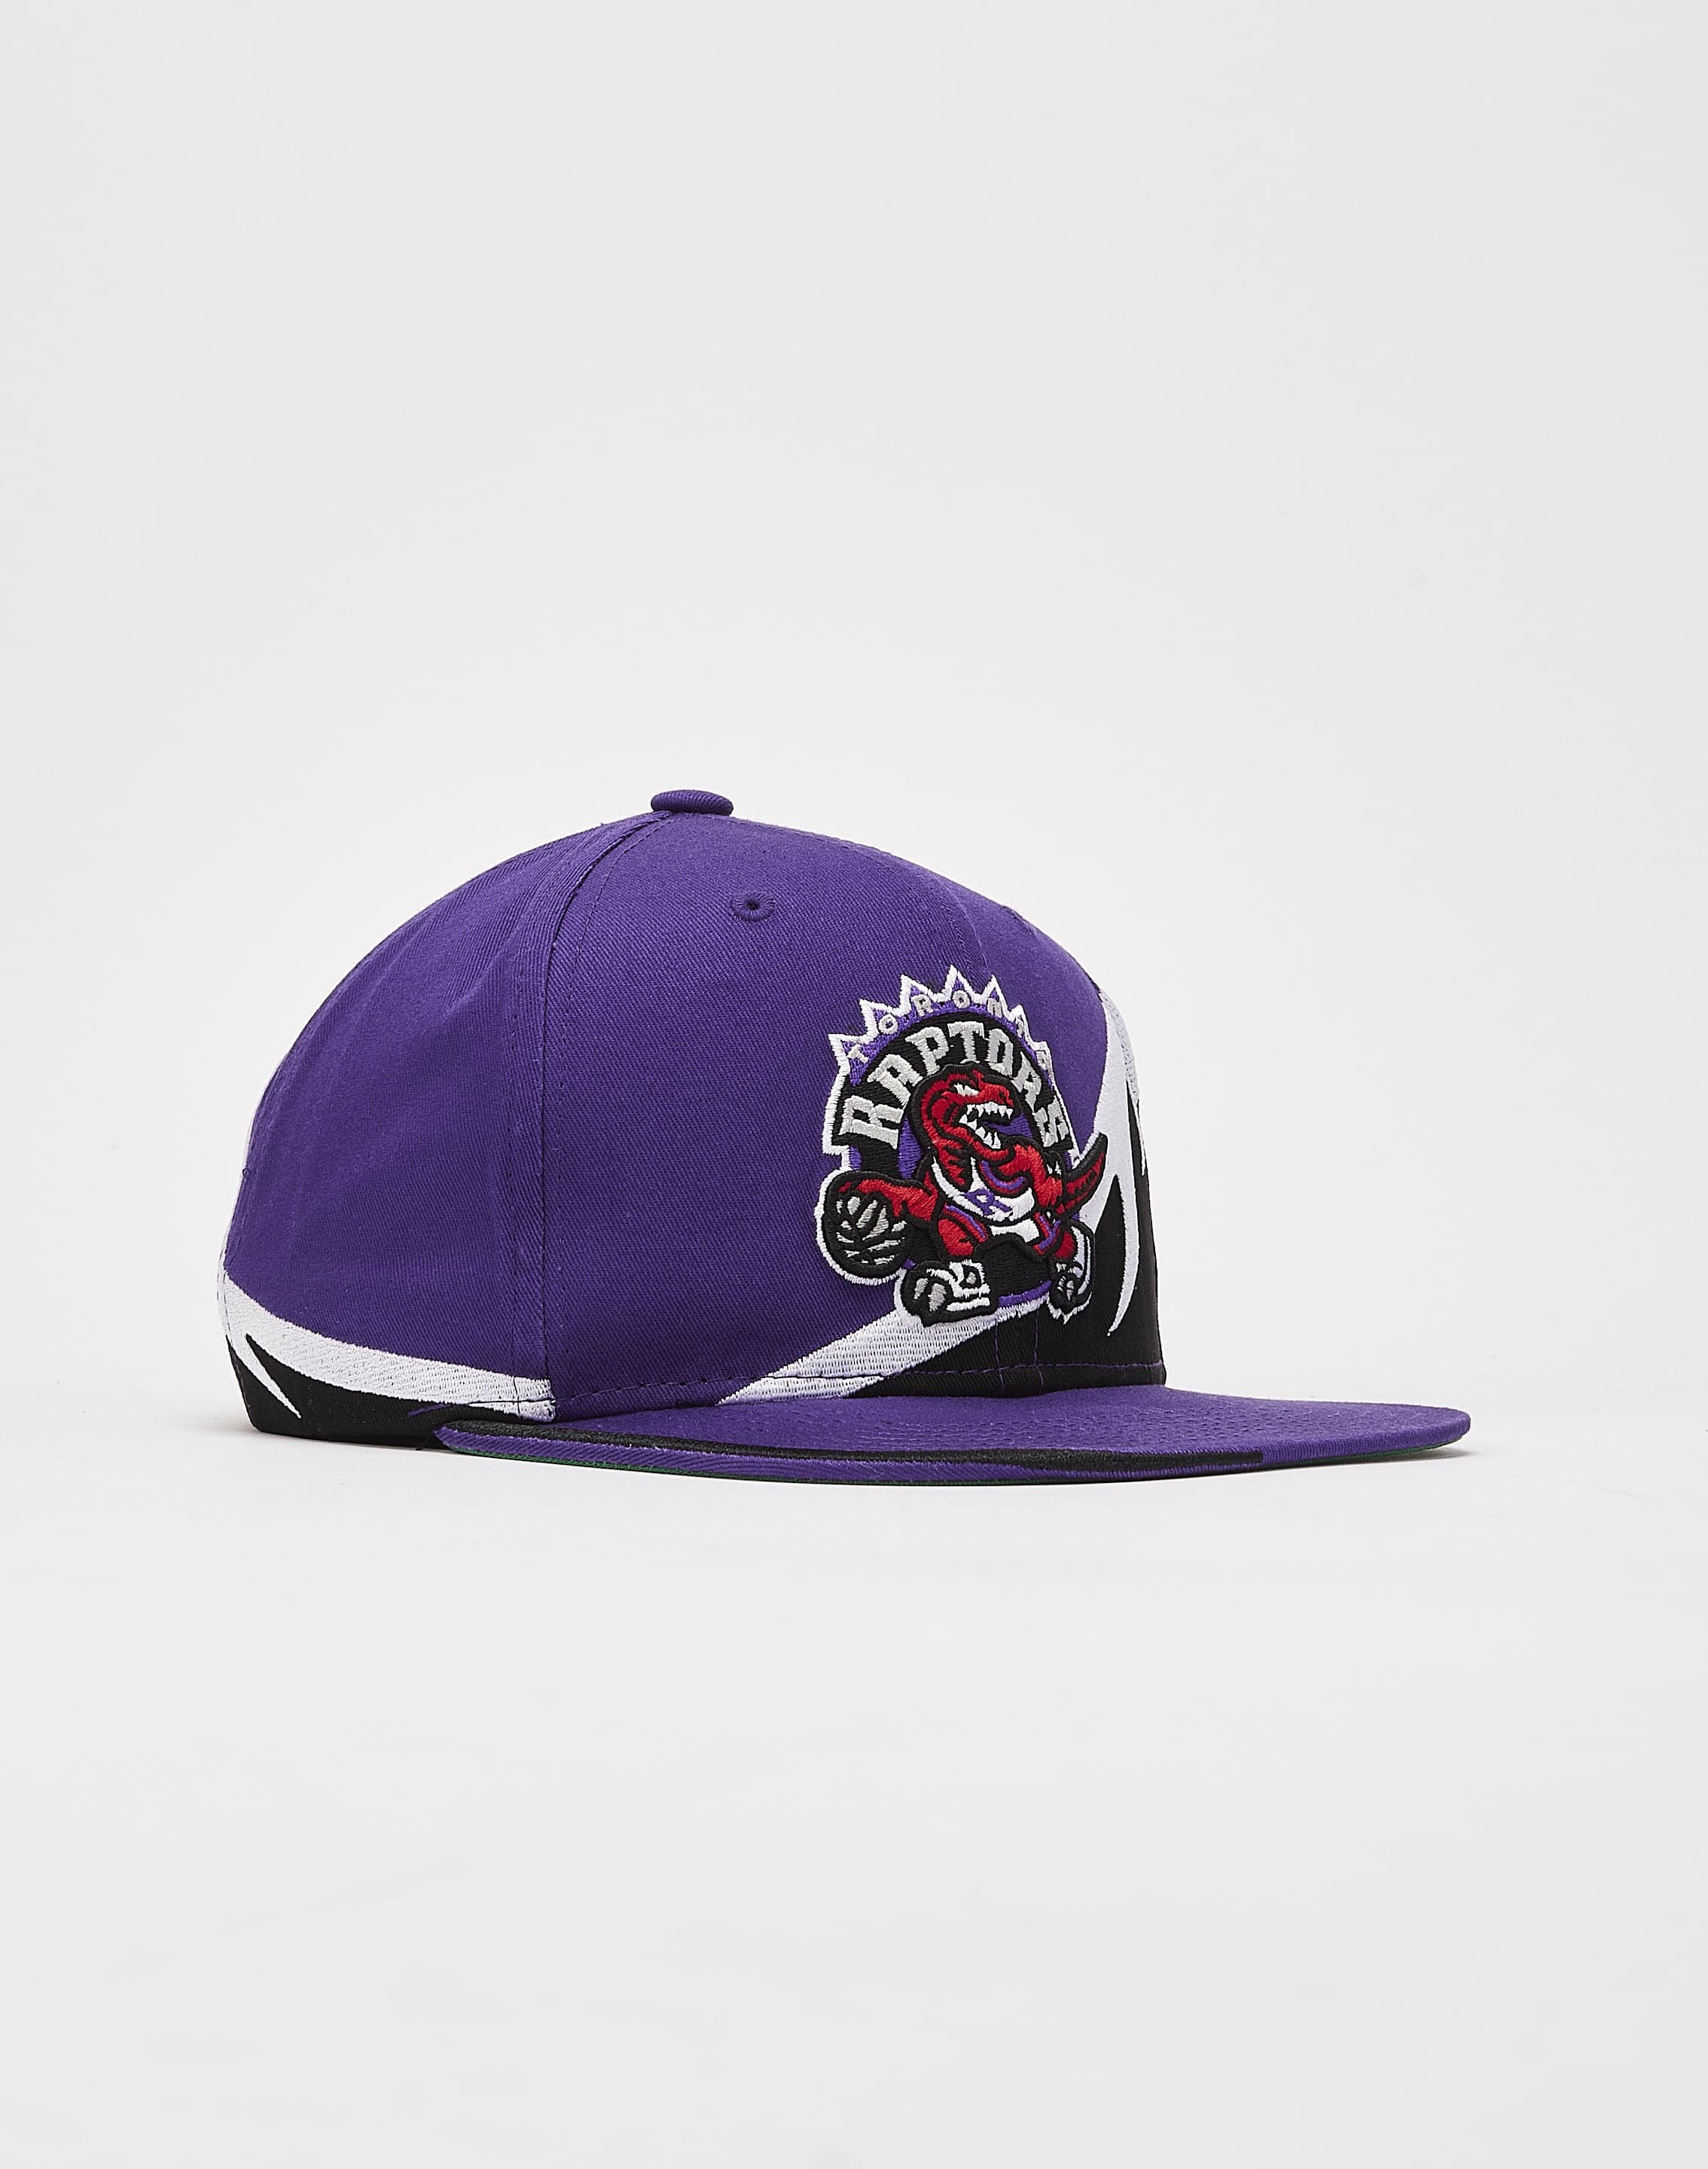 Toronto Raptors Adidas Snapback Hat Nba New Purple Red 